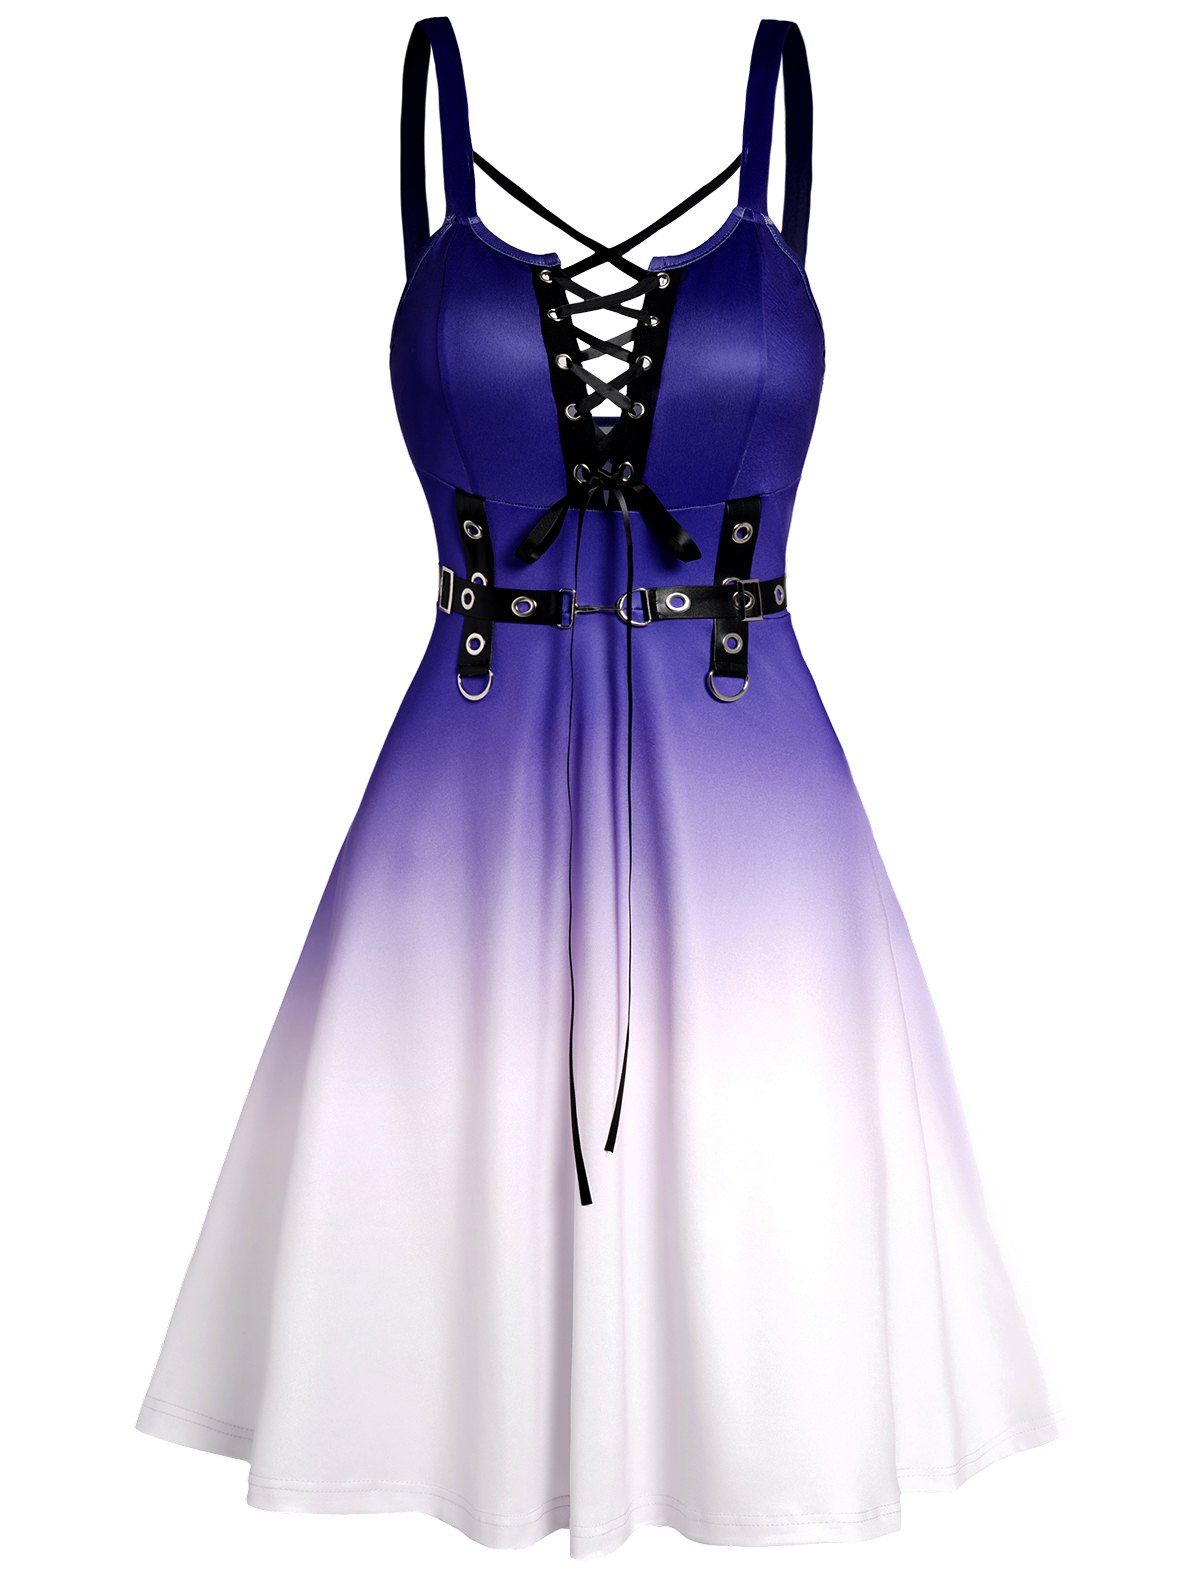 Ombre Dress Lace Up Crisscross Grommet Sleeveless High Waisted A Line Mini Dress - PURPLE M